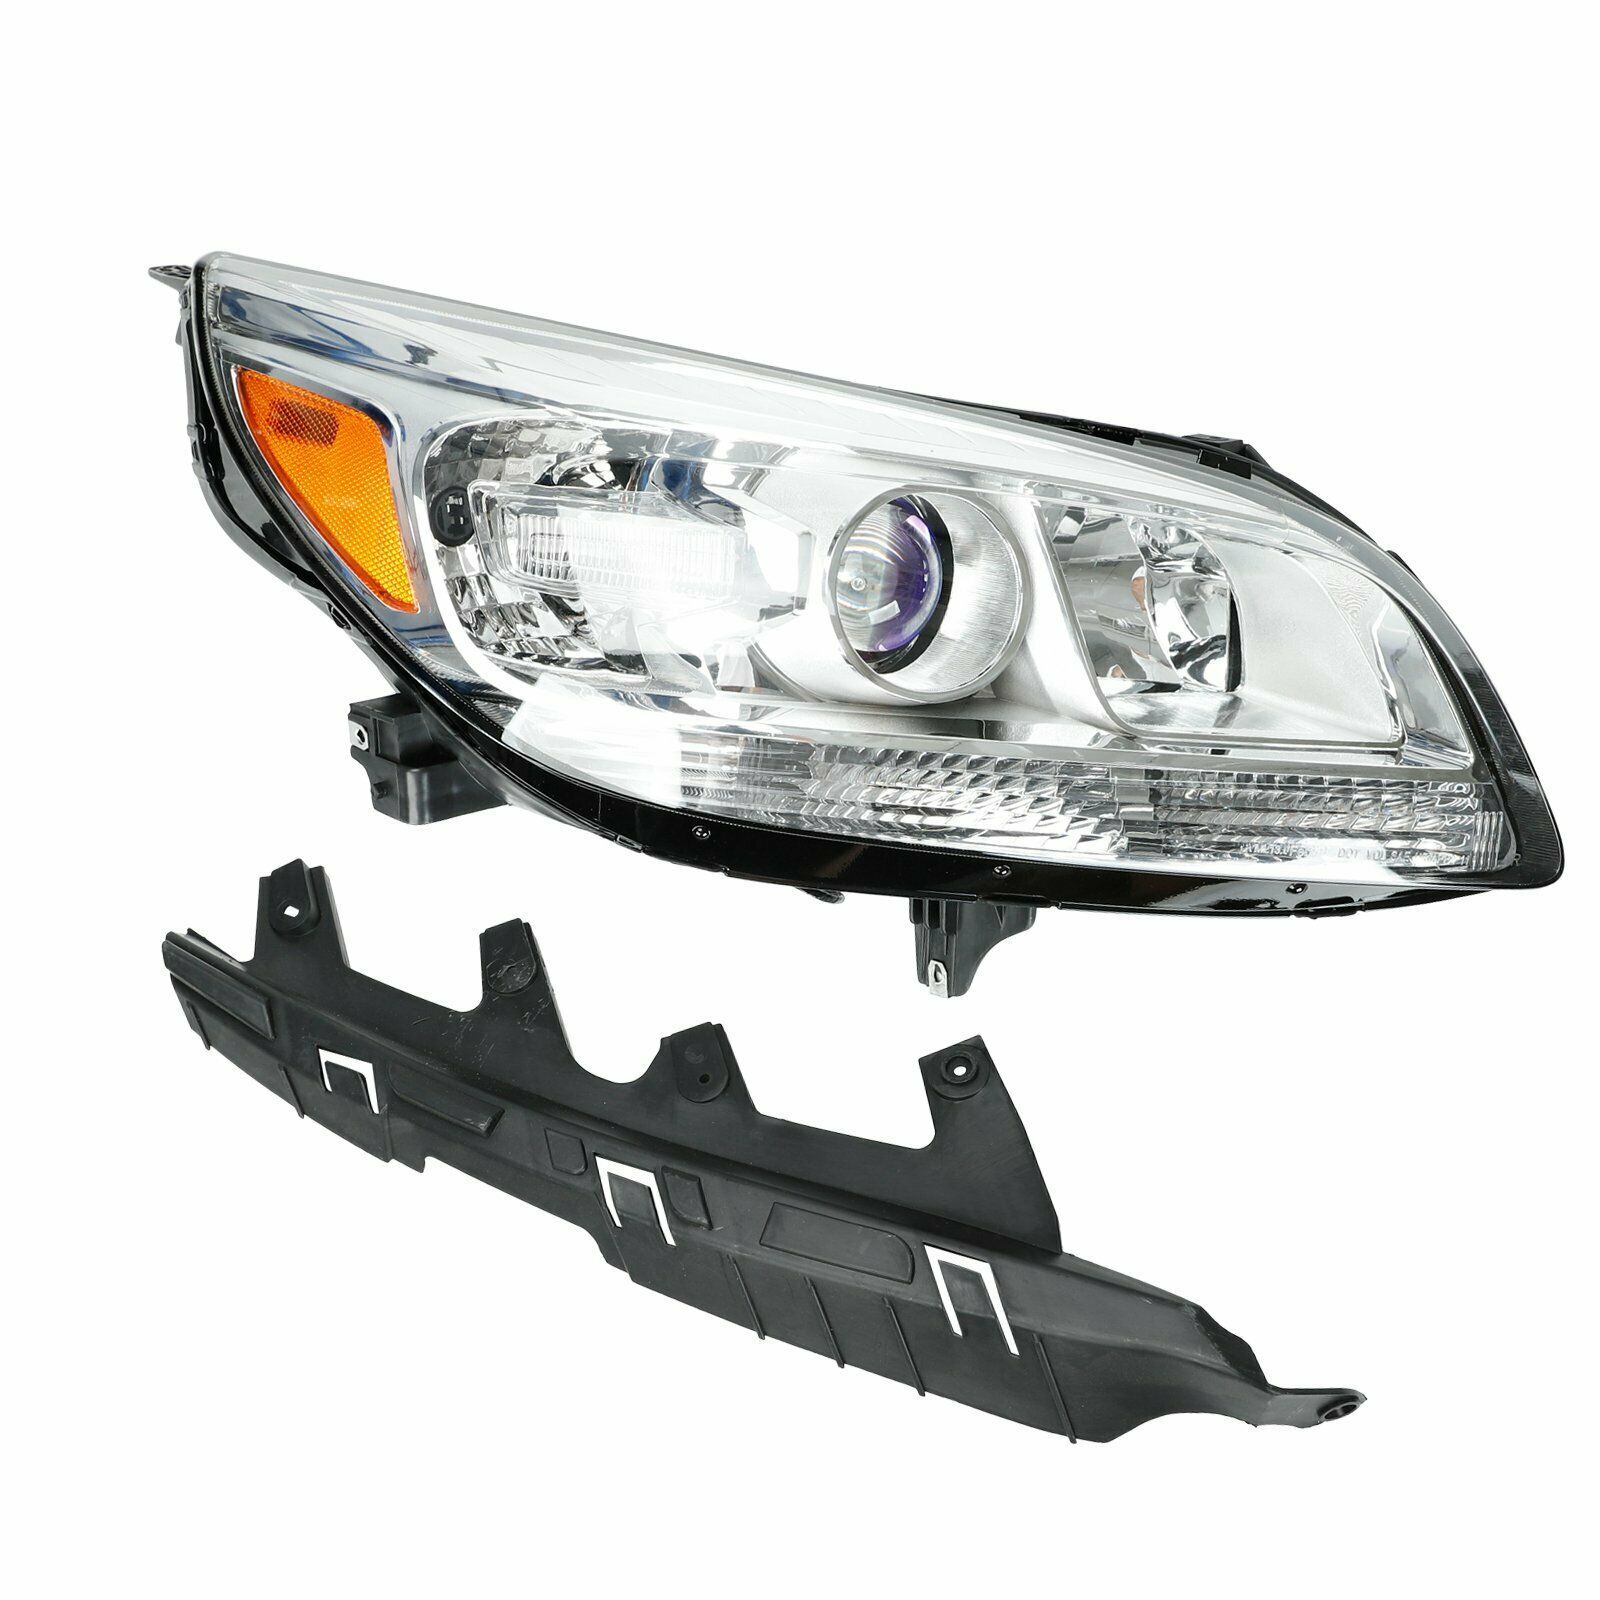 For 2013-2015 Chevy Malibu LT LTZ Projector Headlight Headlamp Passenger Side